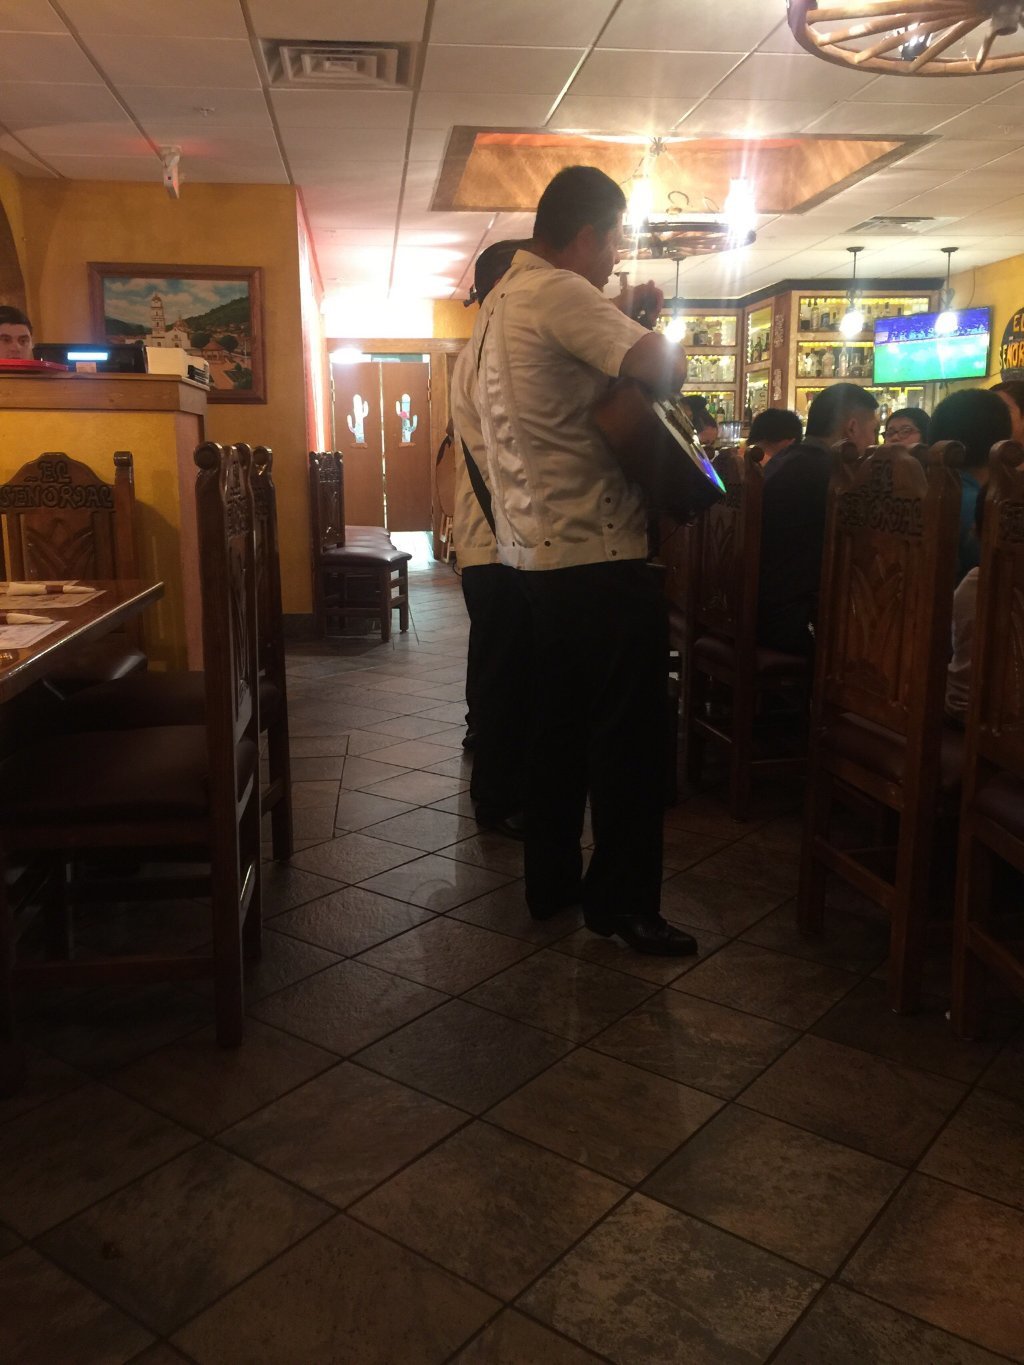 El Senorial Mexican Restaurant